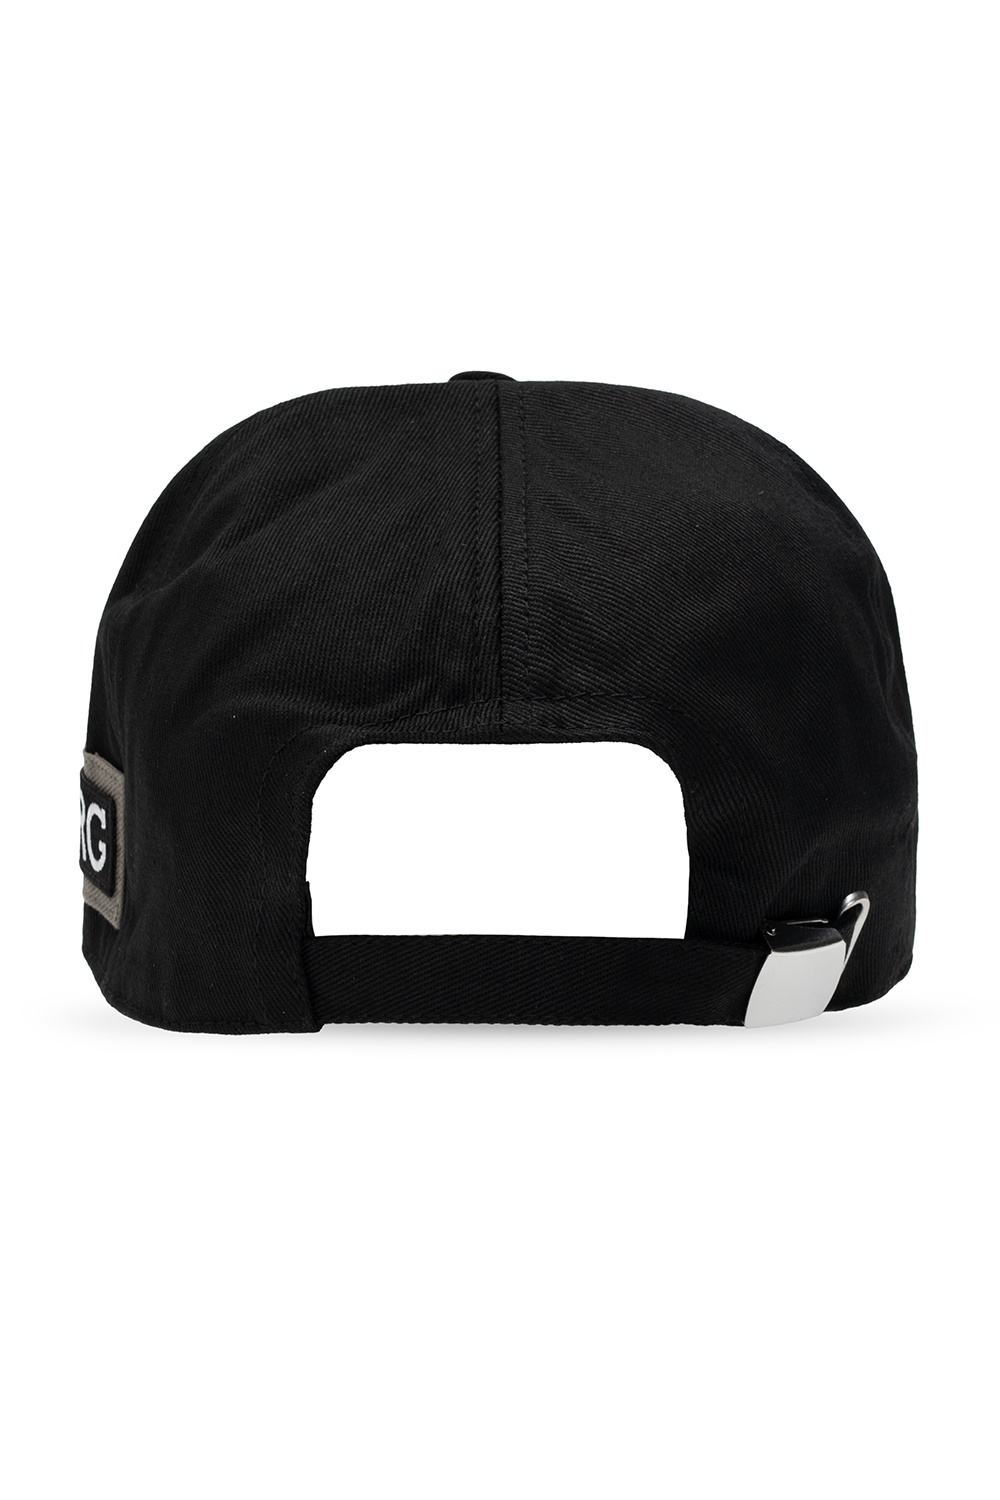 IetpShops Guatemala - pens Iceberg cap men Black logo caps Baseball with - Fragrance lighters robes